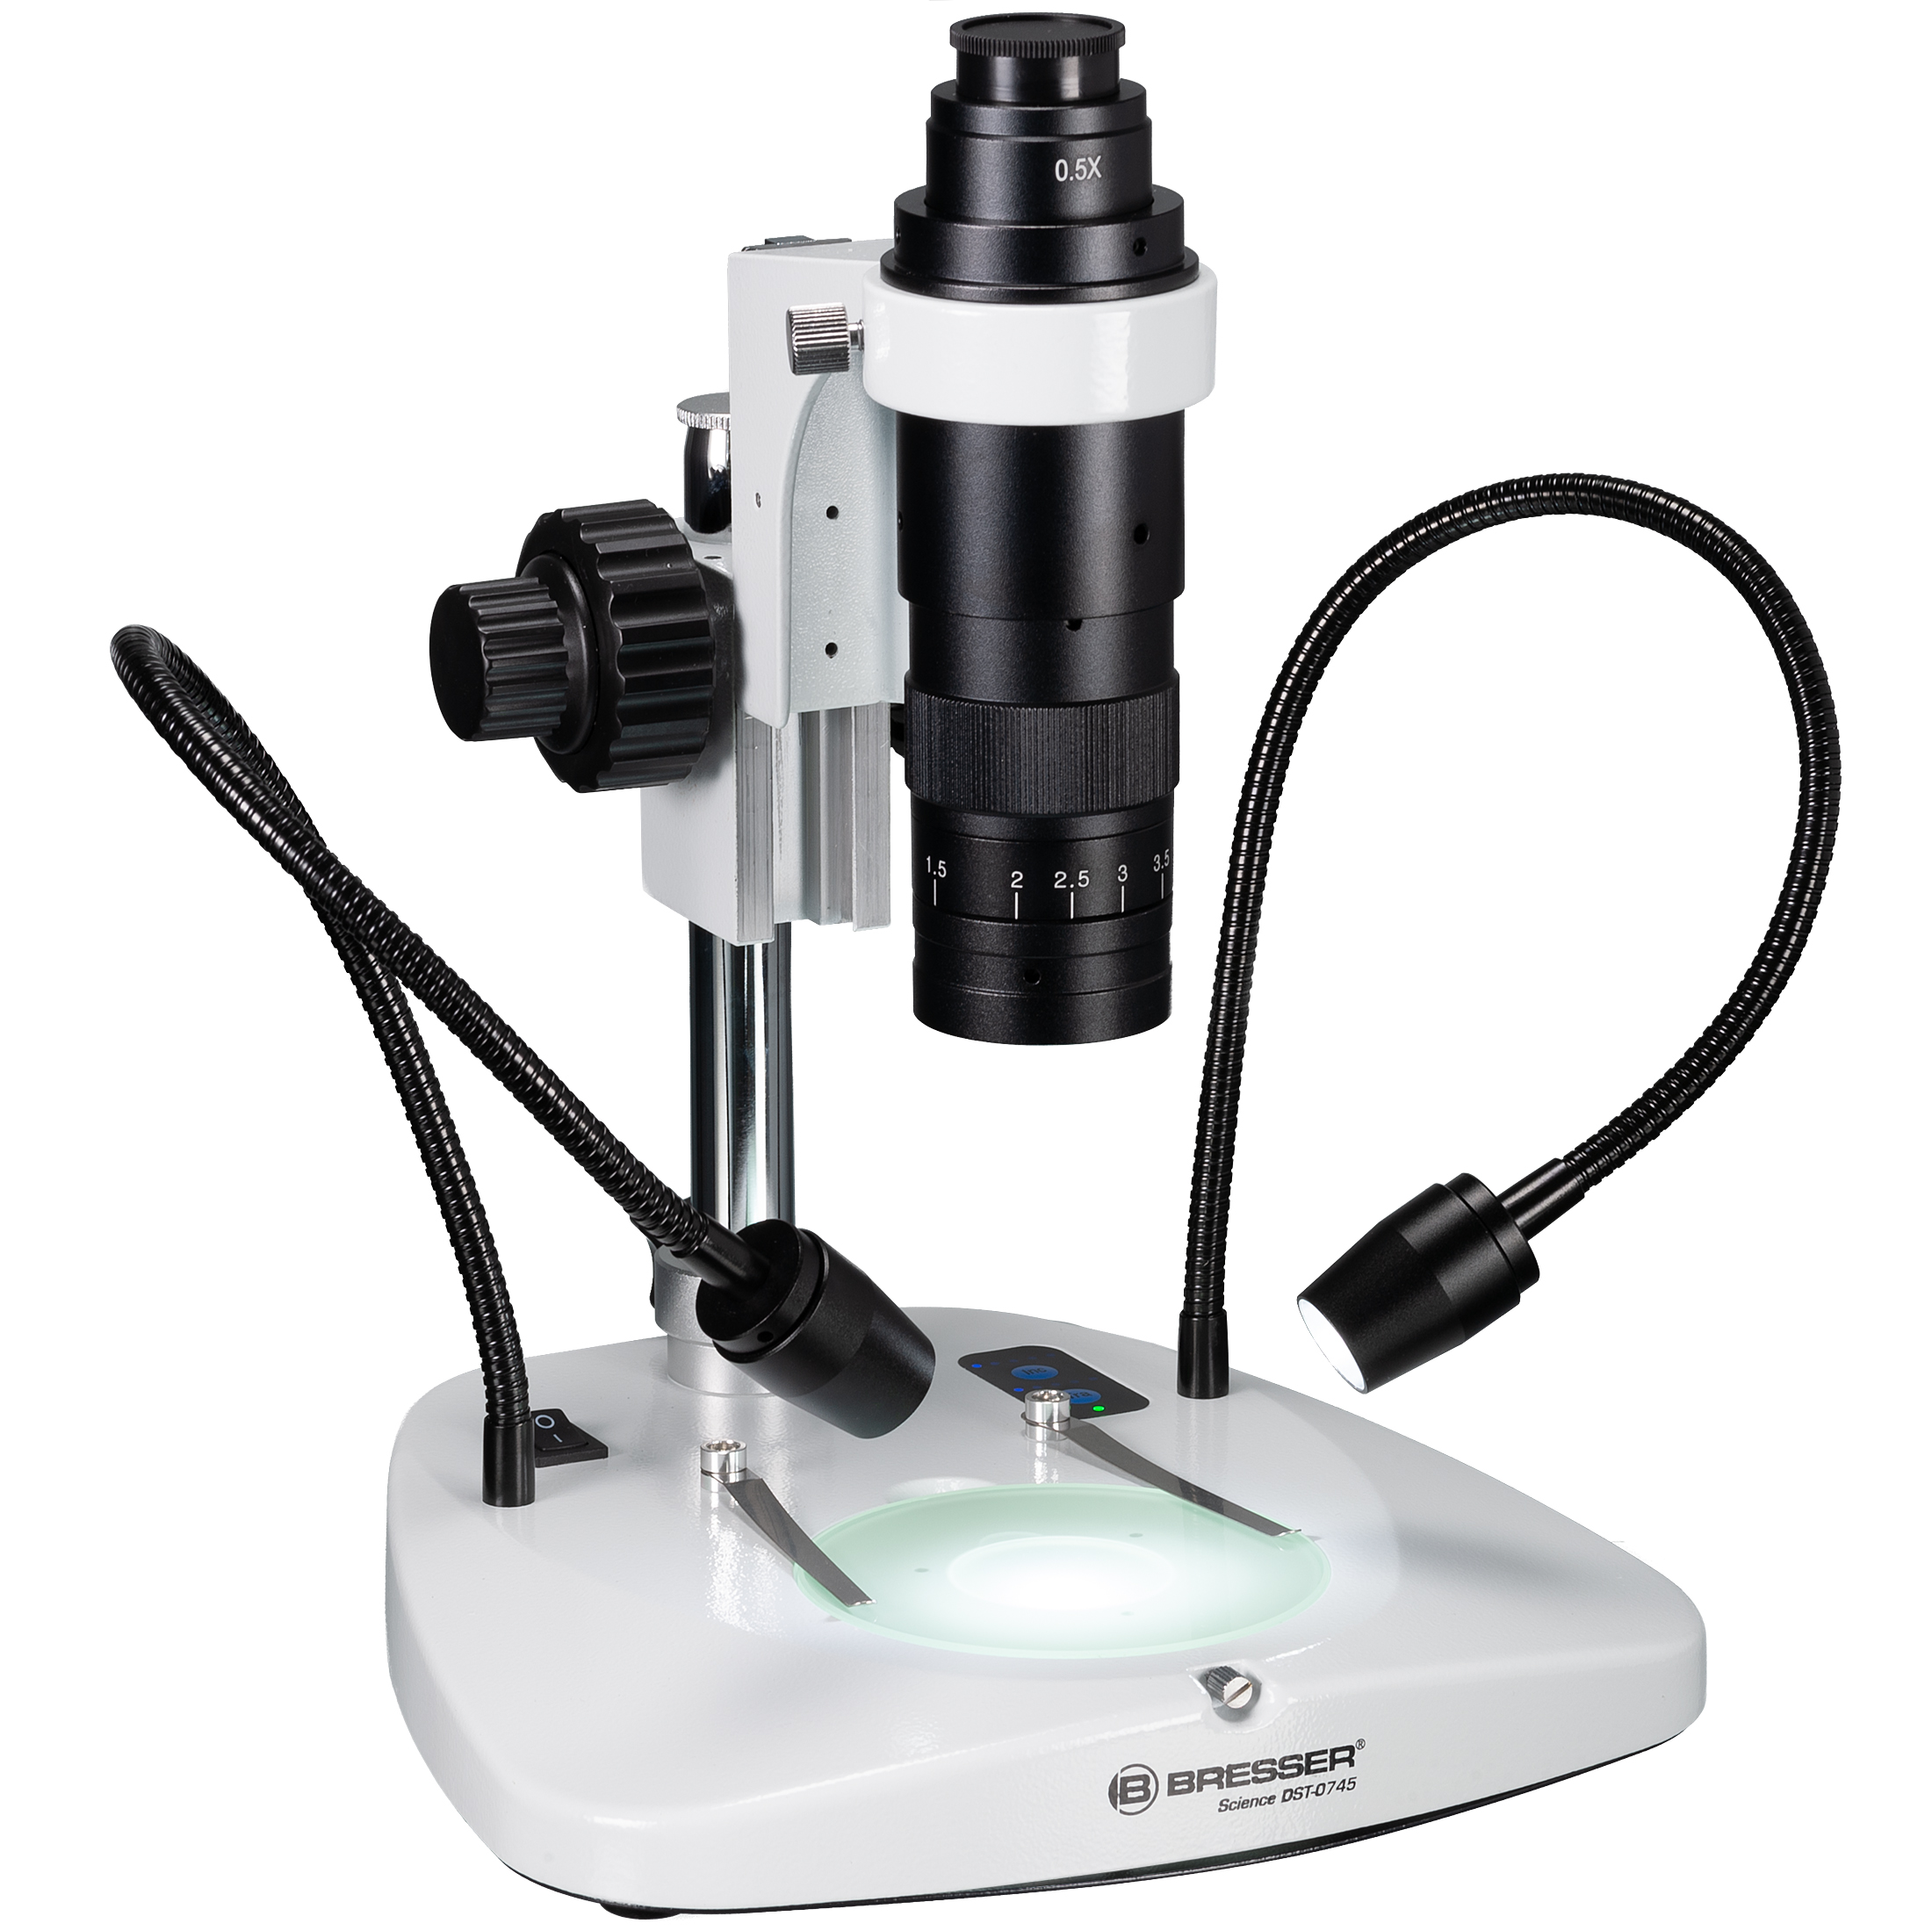 BRESSER DST-0745 microscope avec zoom optique macro